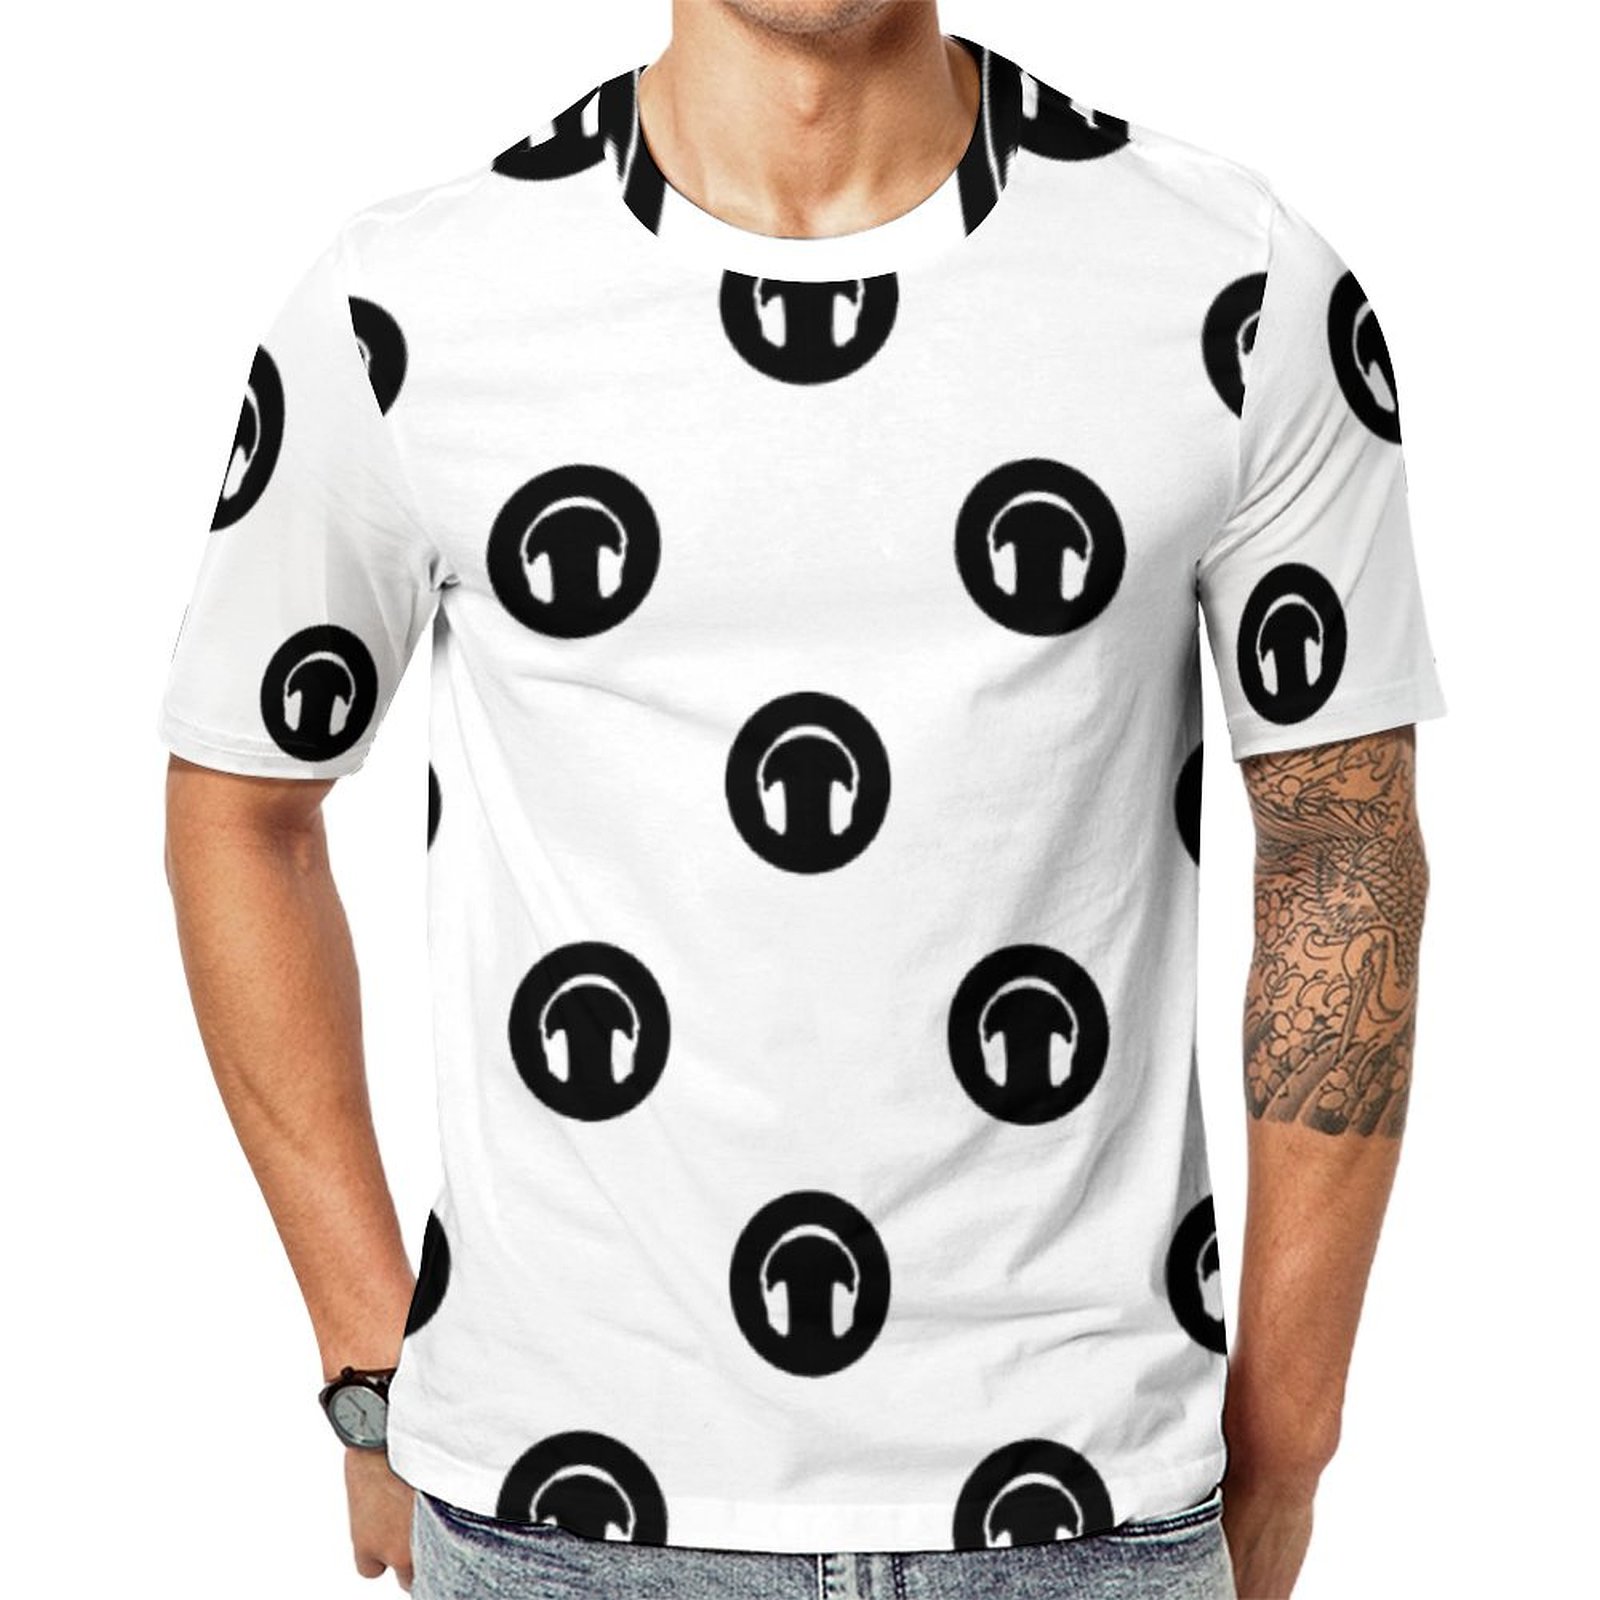 Headphones Themed Polka Dots Short Sleeve Print Unisex Tshirt Summer Casual Tees for Men and Women Coolcoshirts